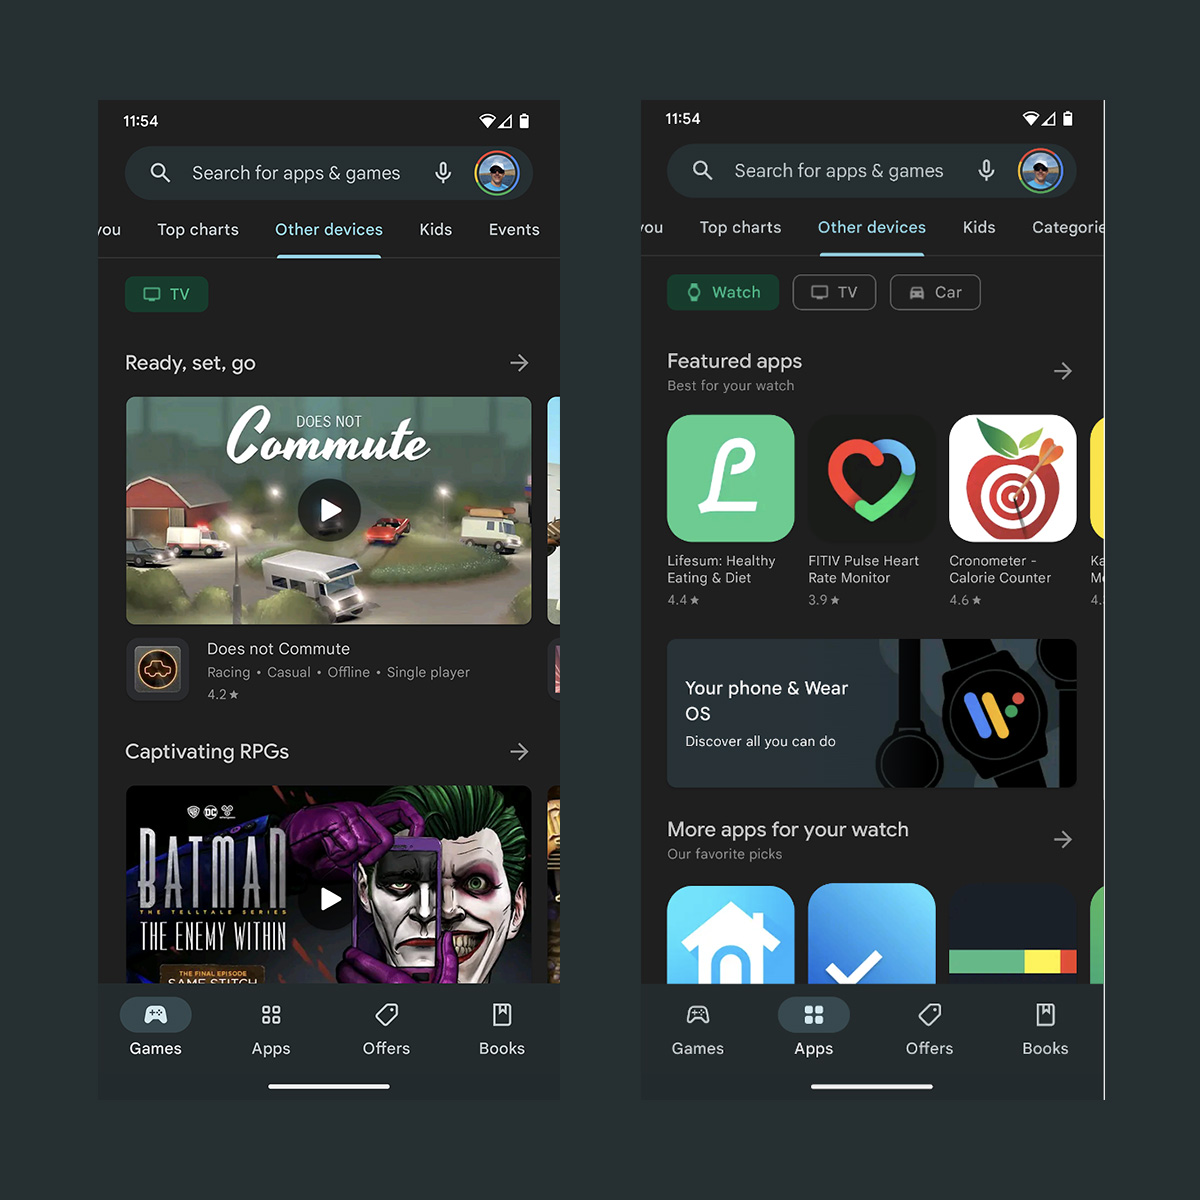 Google Play Store – Neomode